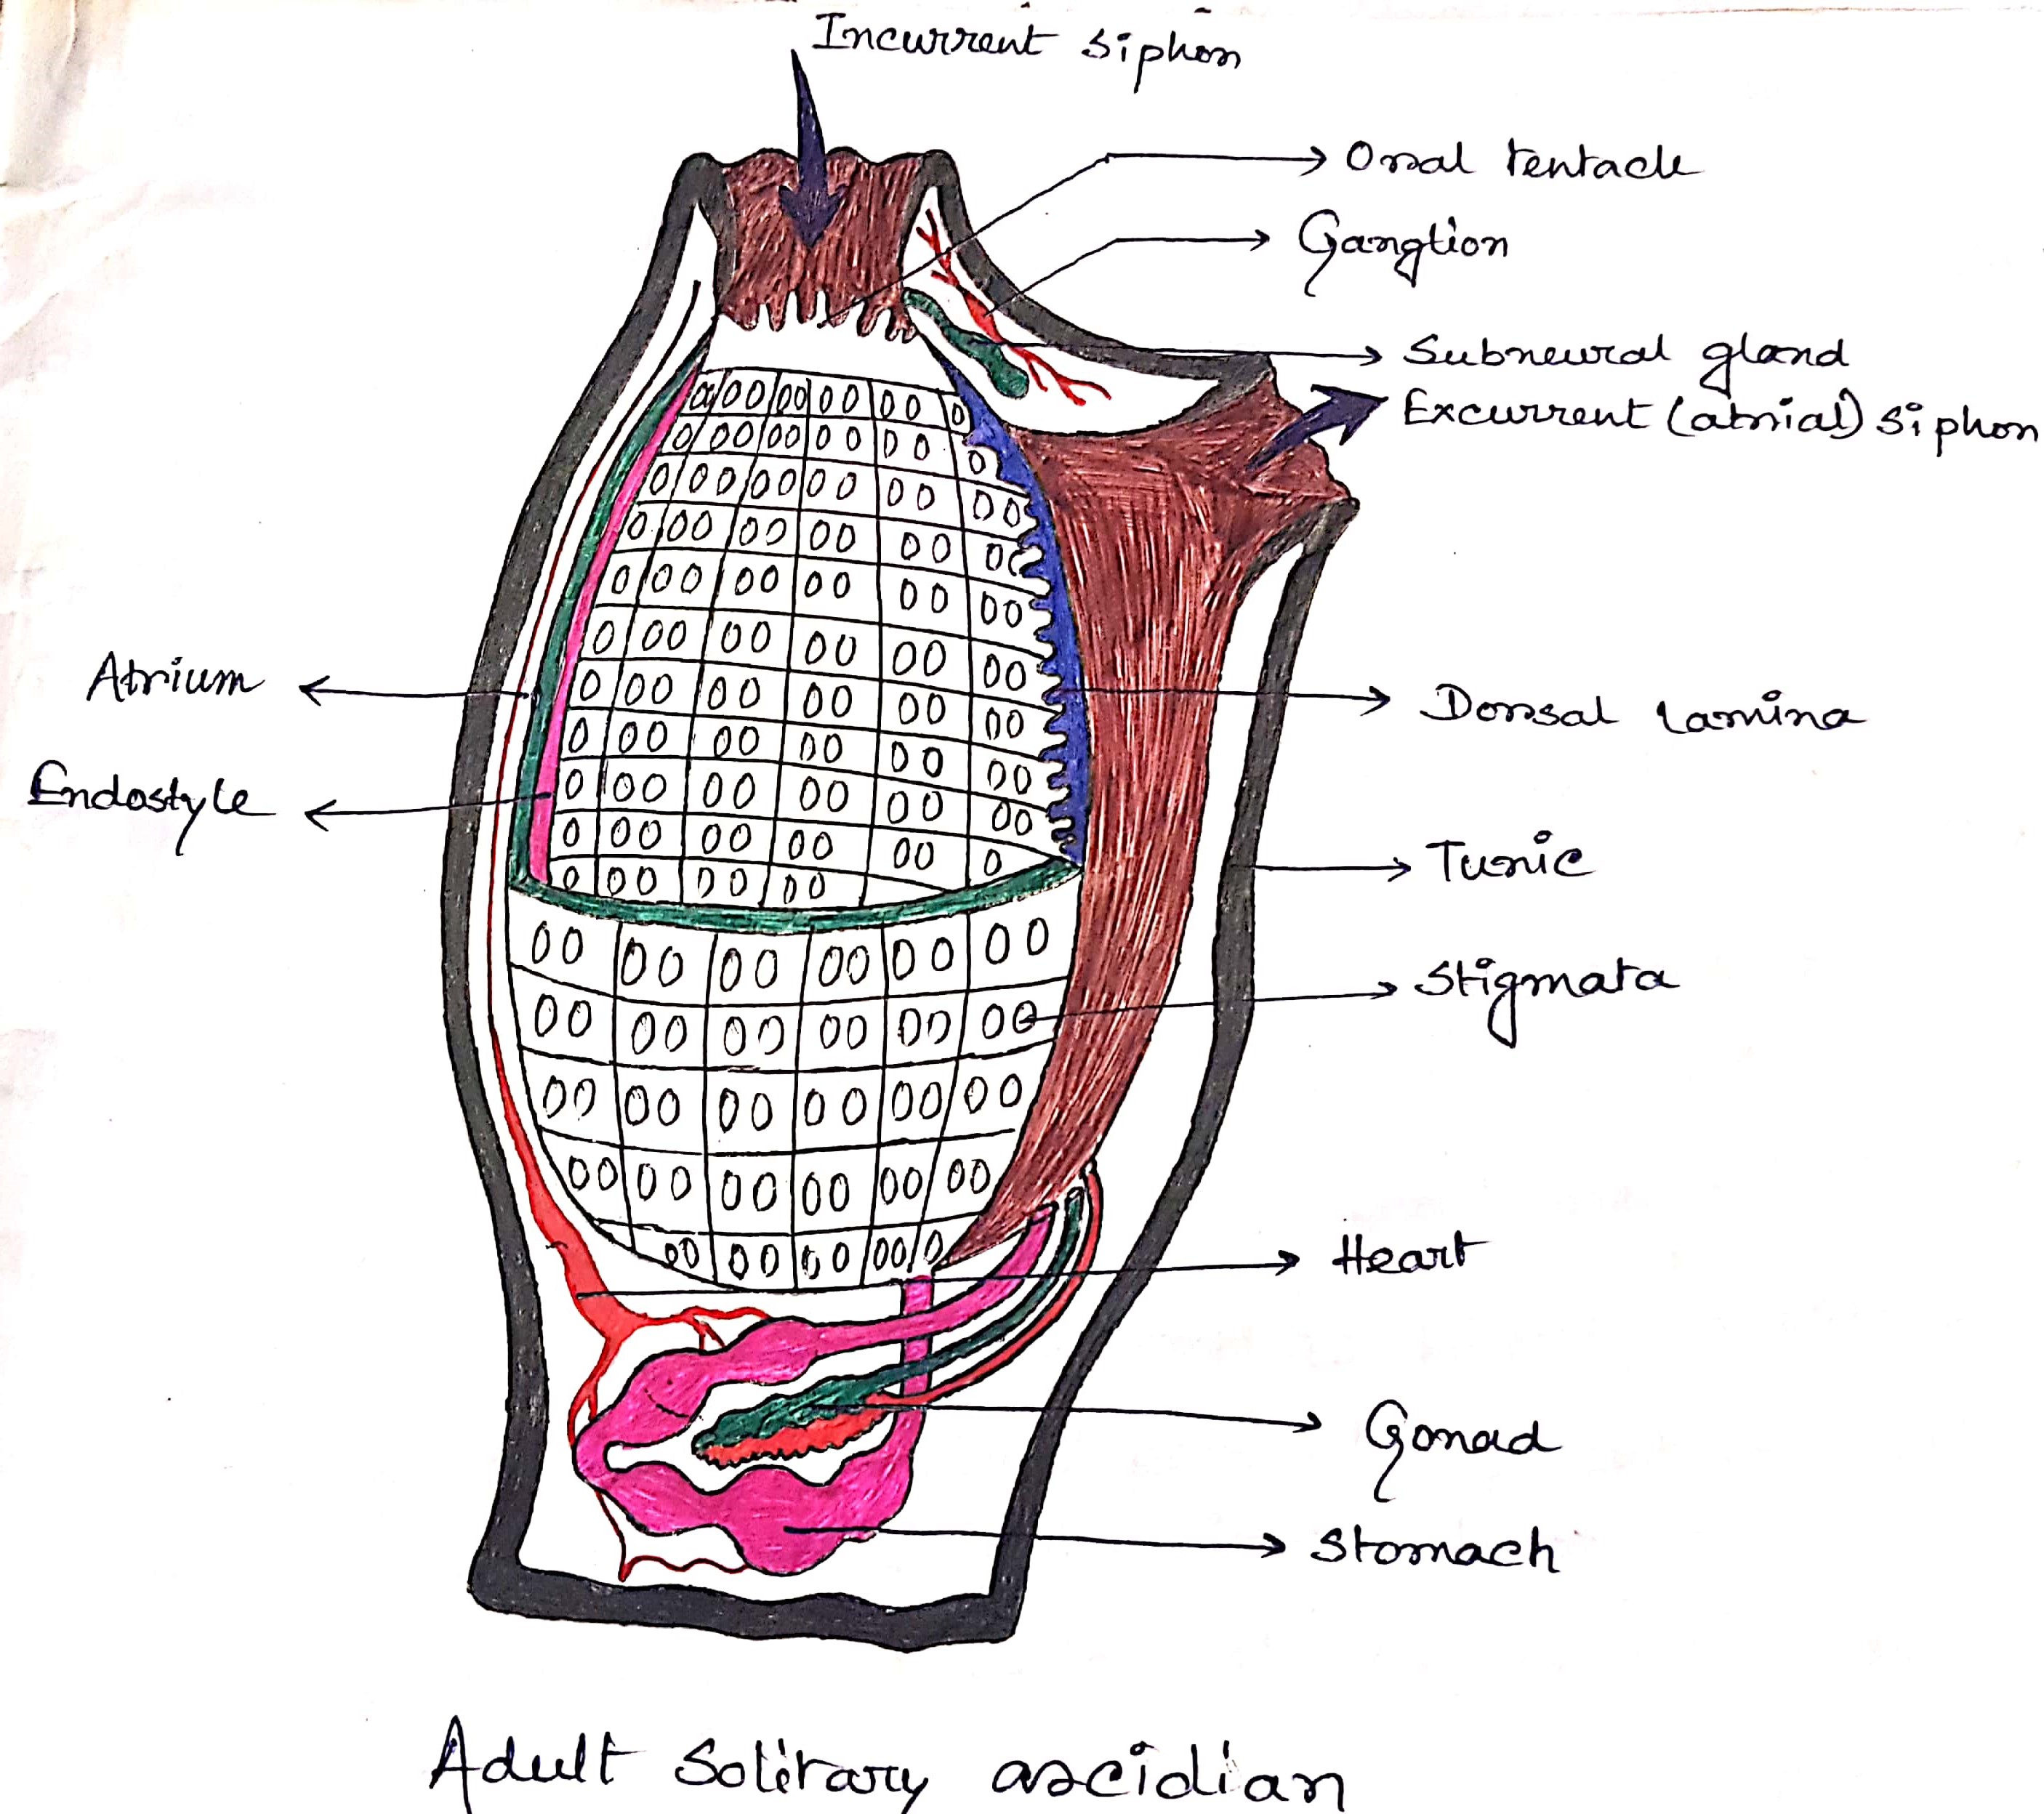 Diagram of Adult Solitary Ascidian